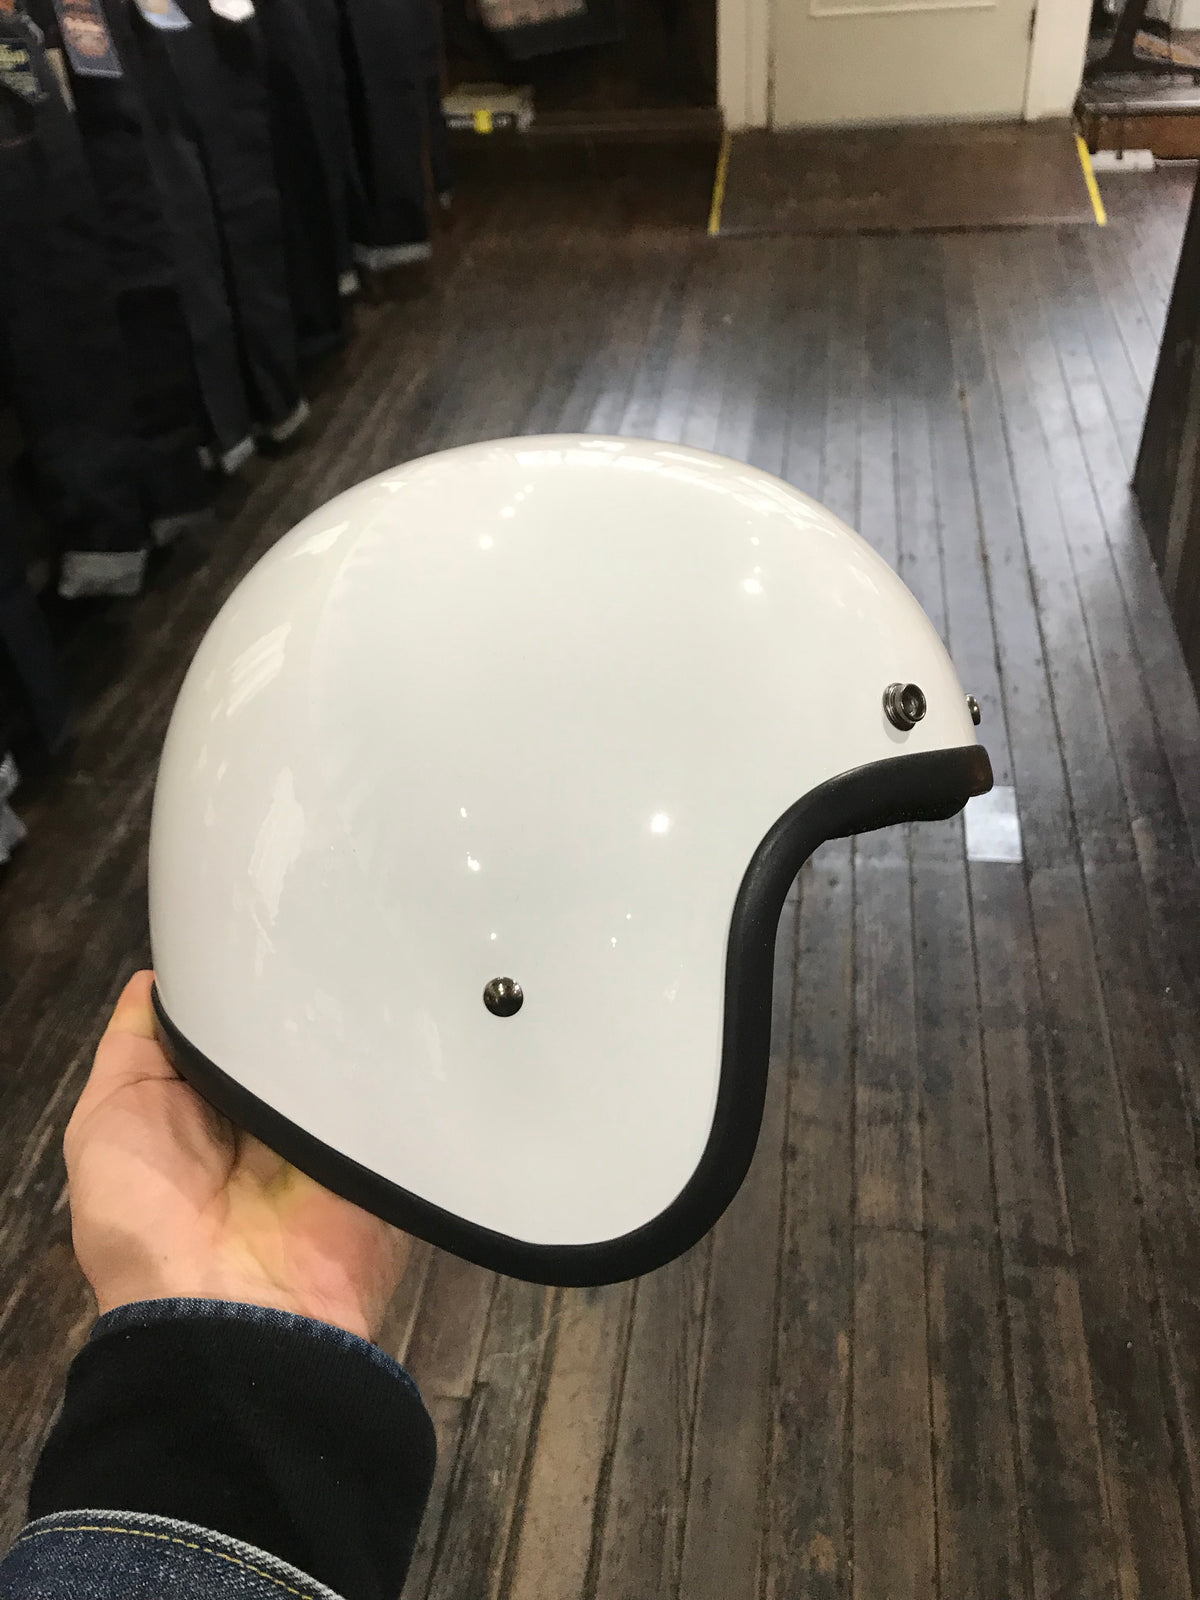 Classic Super Low Profile 3/4 Helmet Matte Black